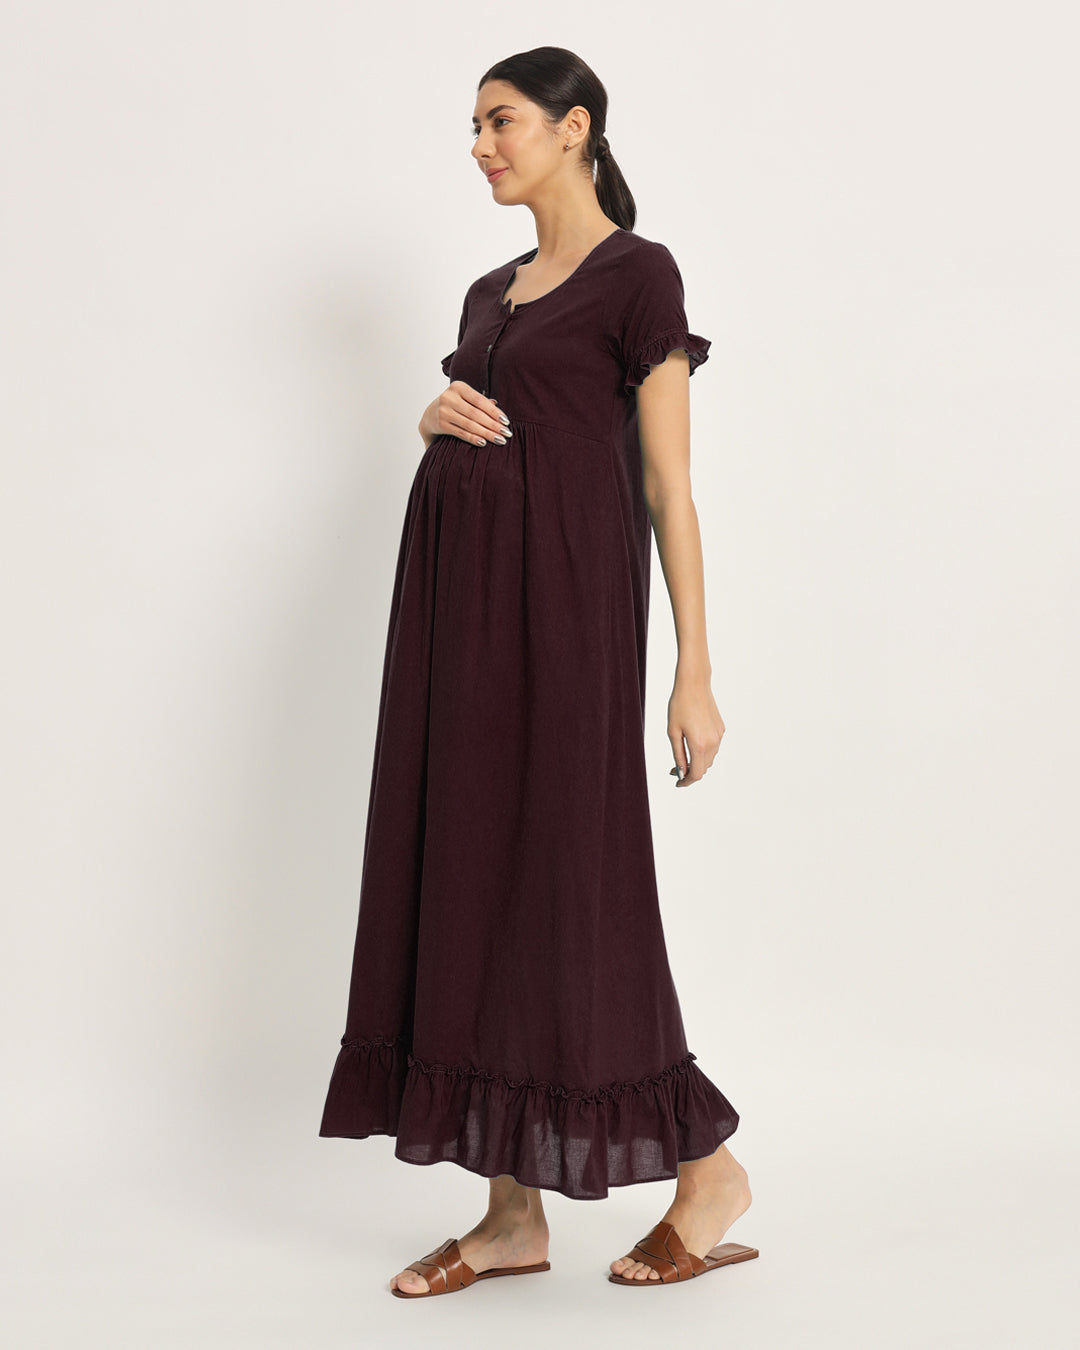 Plum Passion Bumpin' & Stylin' Maternity & Nursing Dress